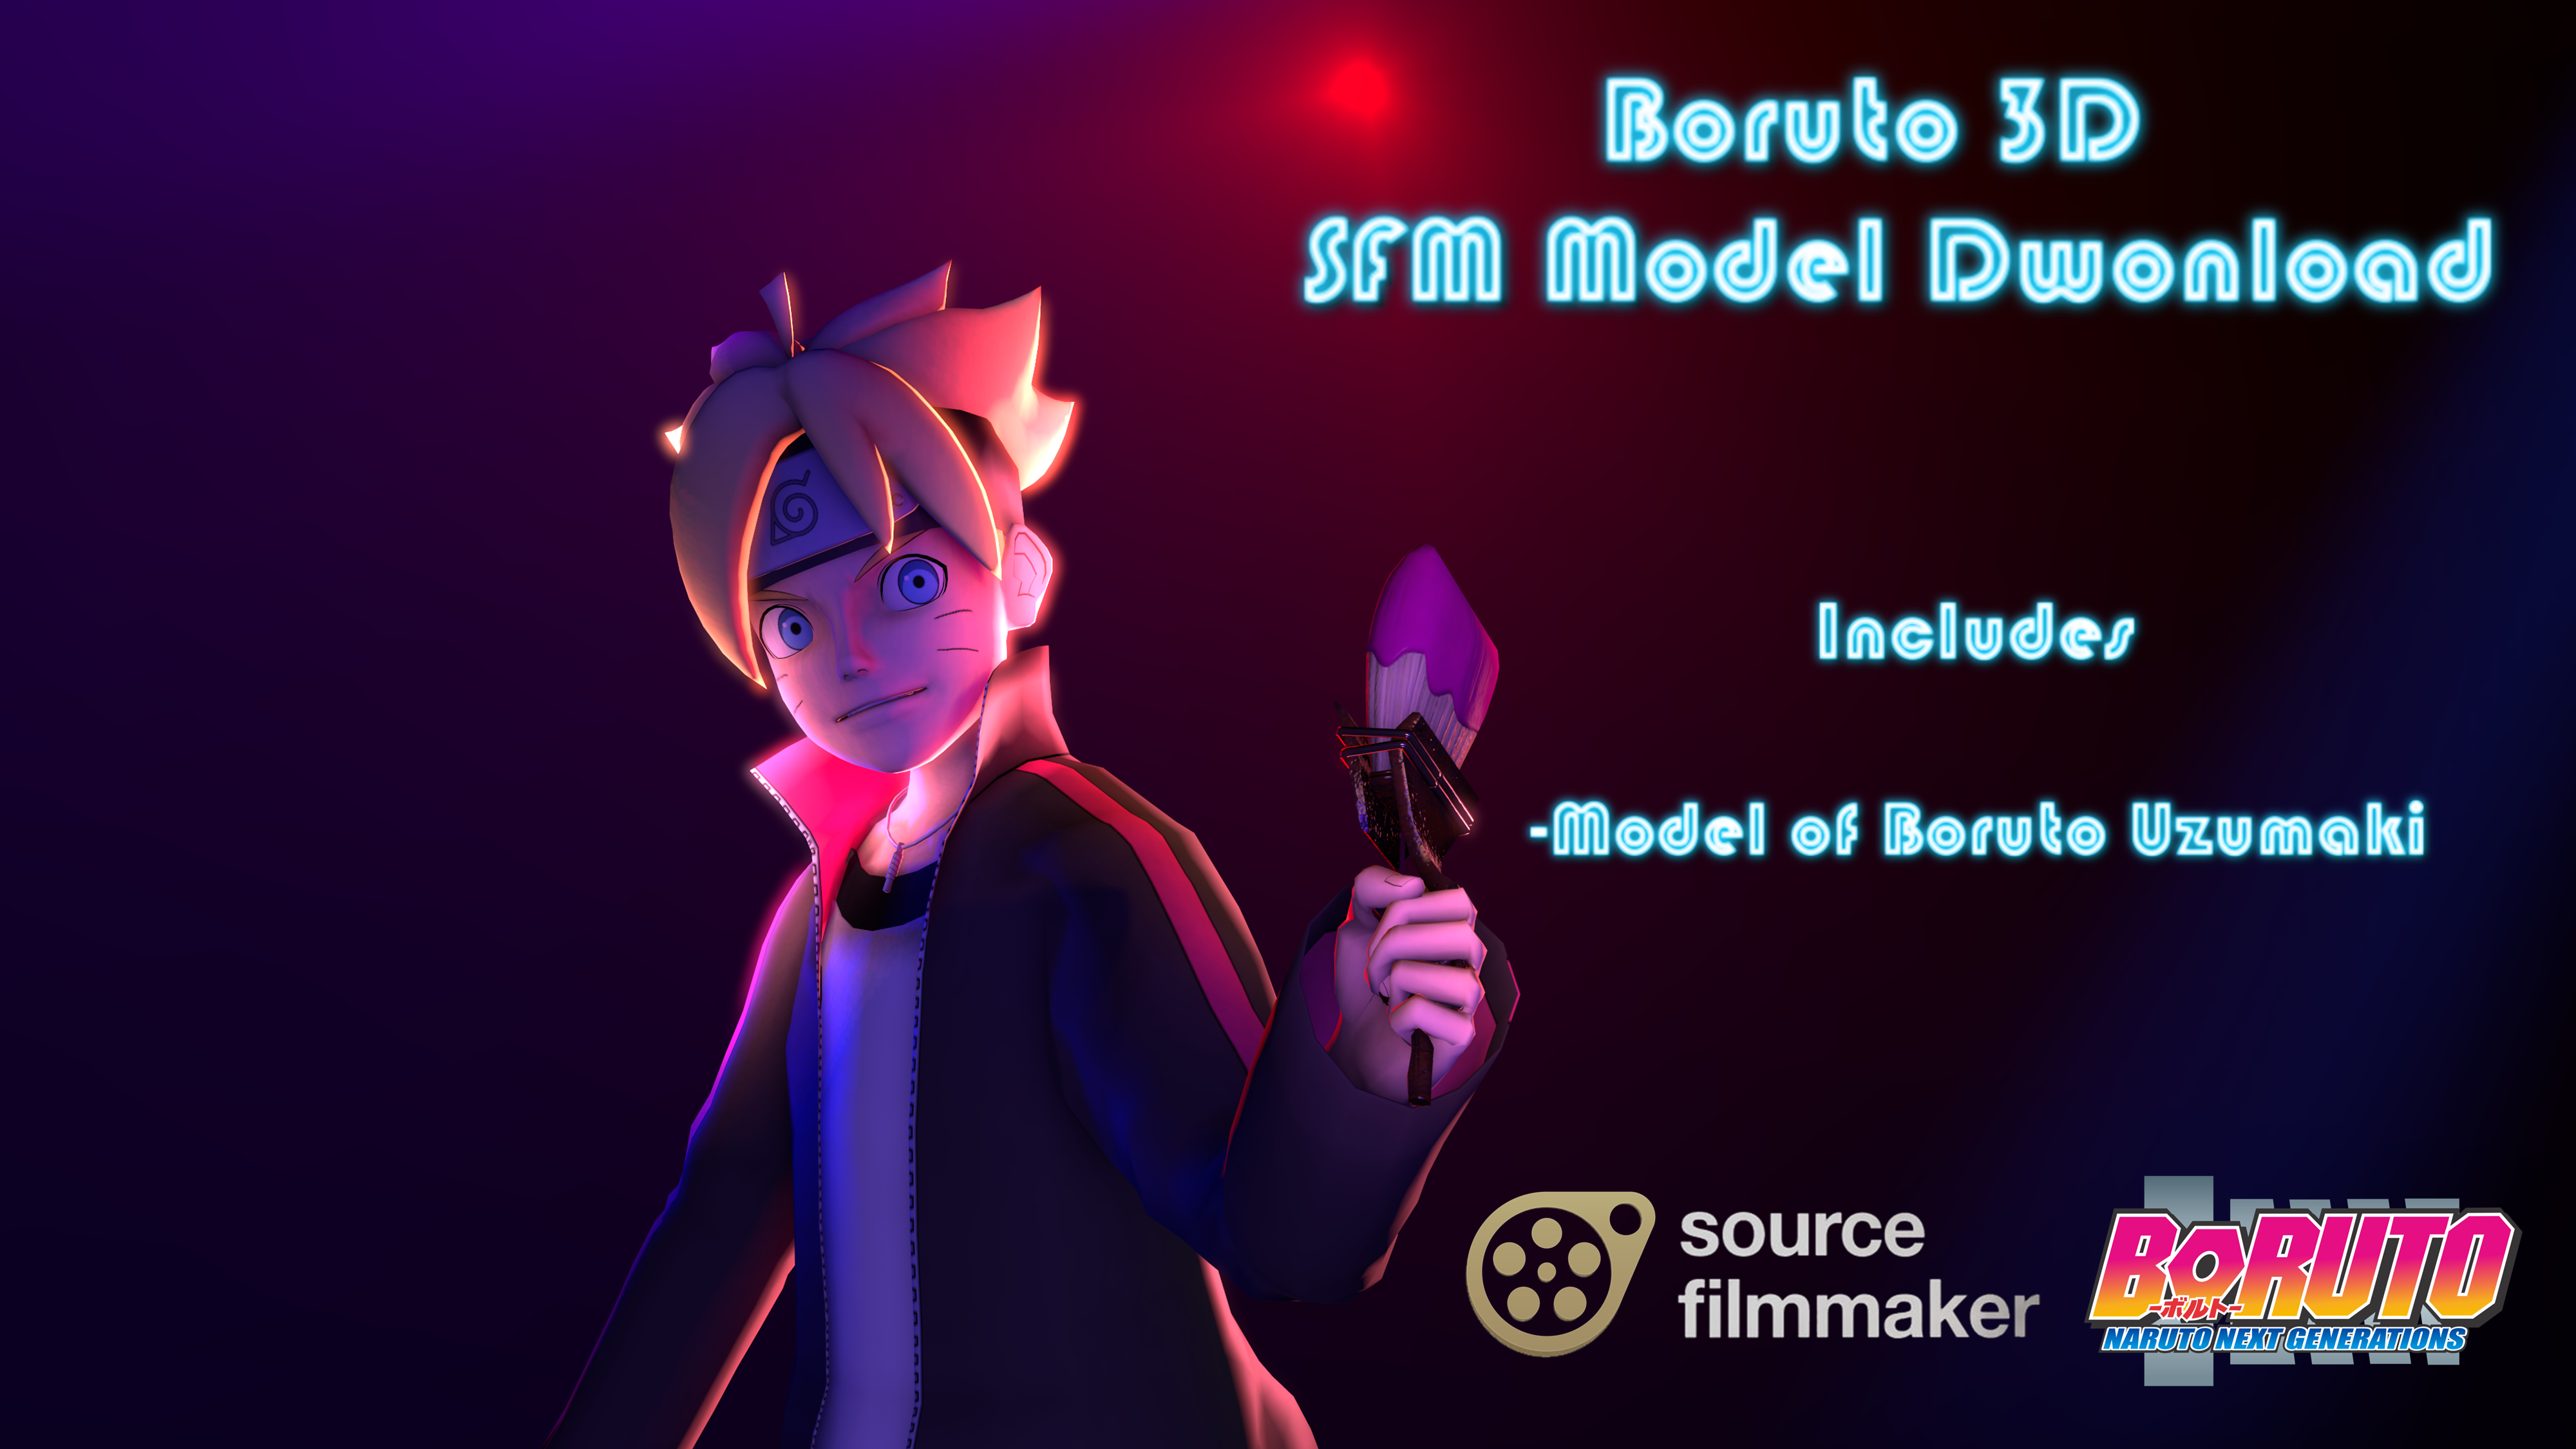 SFM Resource] Boruto Uzumaki 3D Model Download by Jpuffle5 on DeviantArt